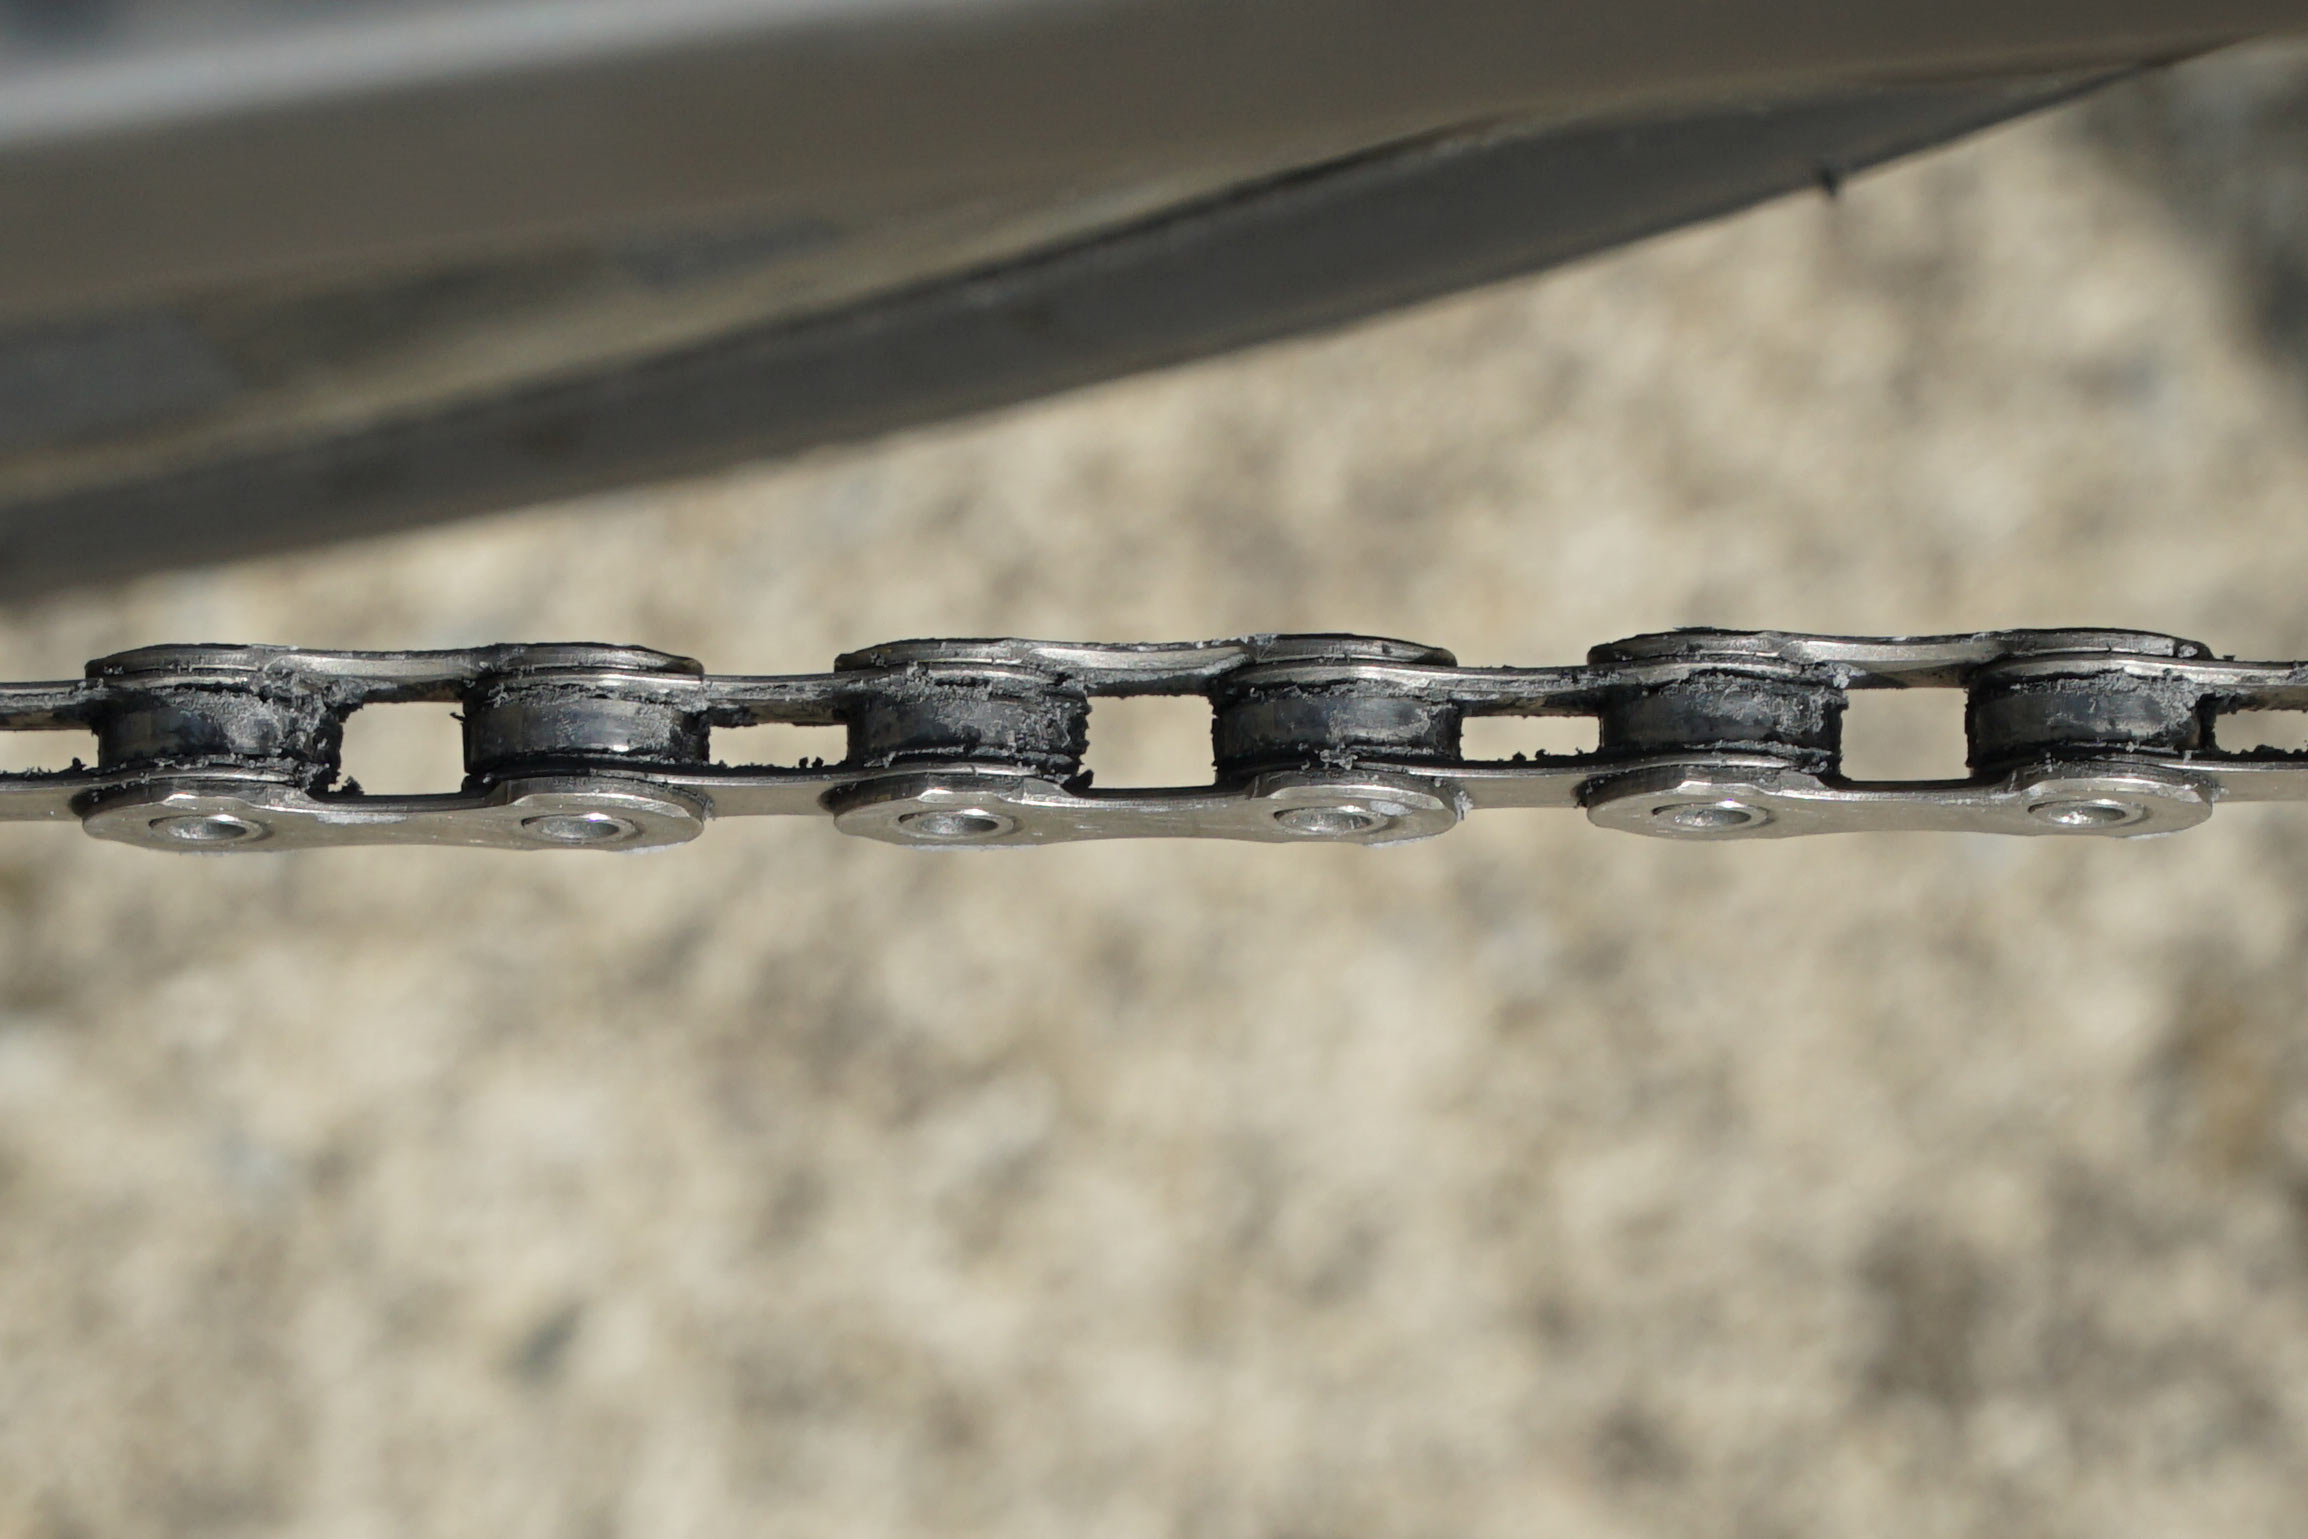 ceramicspeed ufo drip chain coating wax lube shown on chain closeup